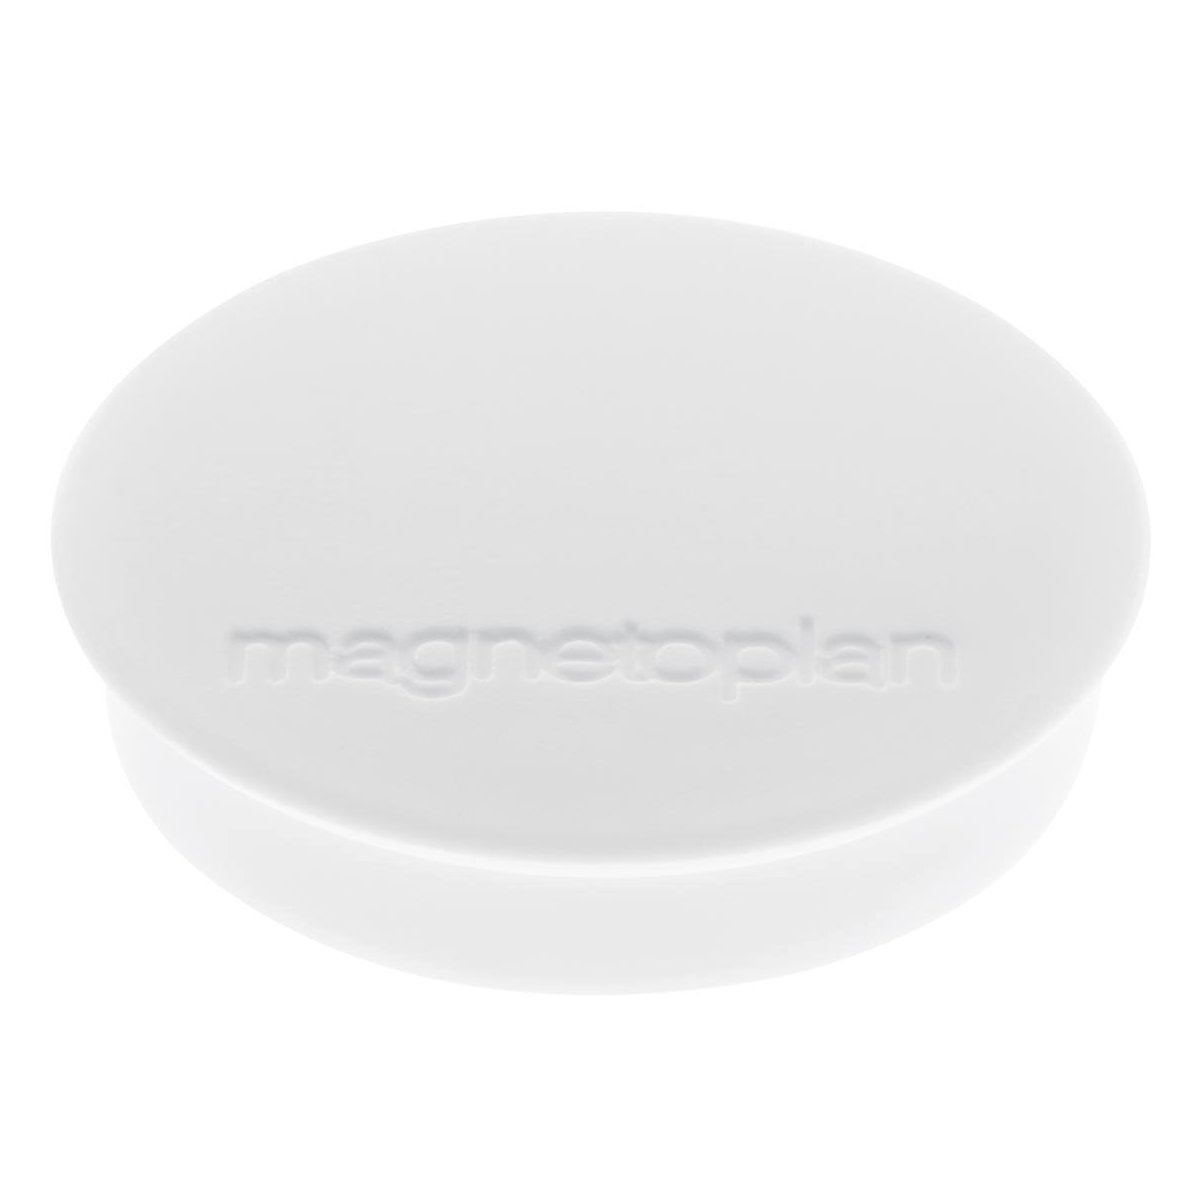 Magnet DISCOFIX STANDARD magnetoplan, Ø 30 mm, VE 80 Stk, weiß-9